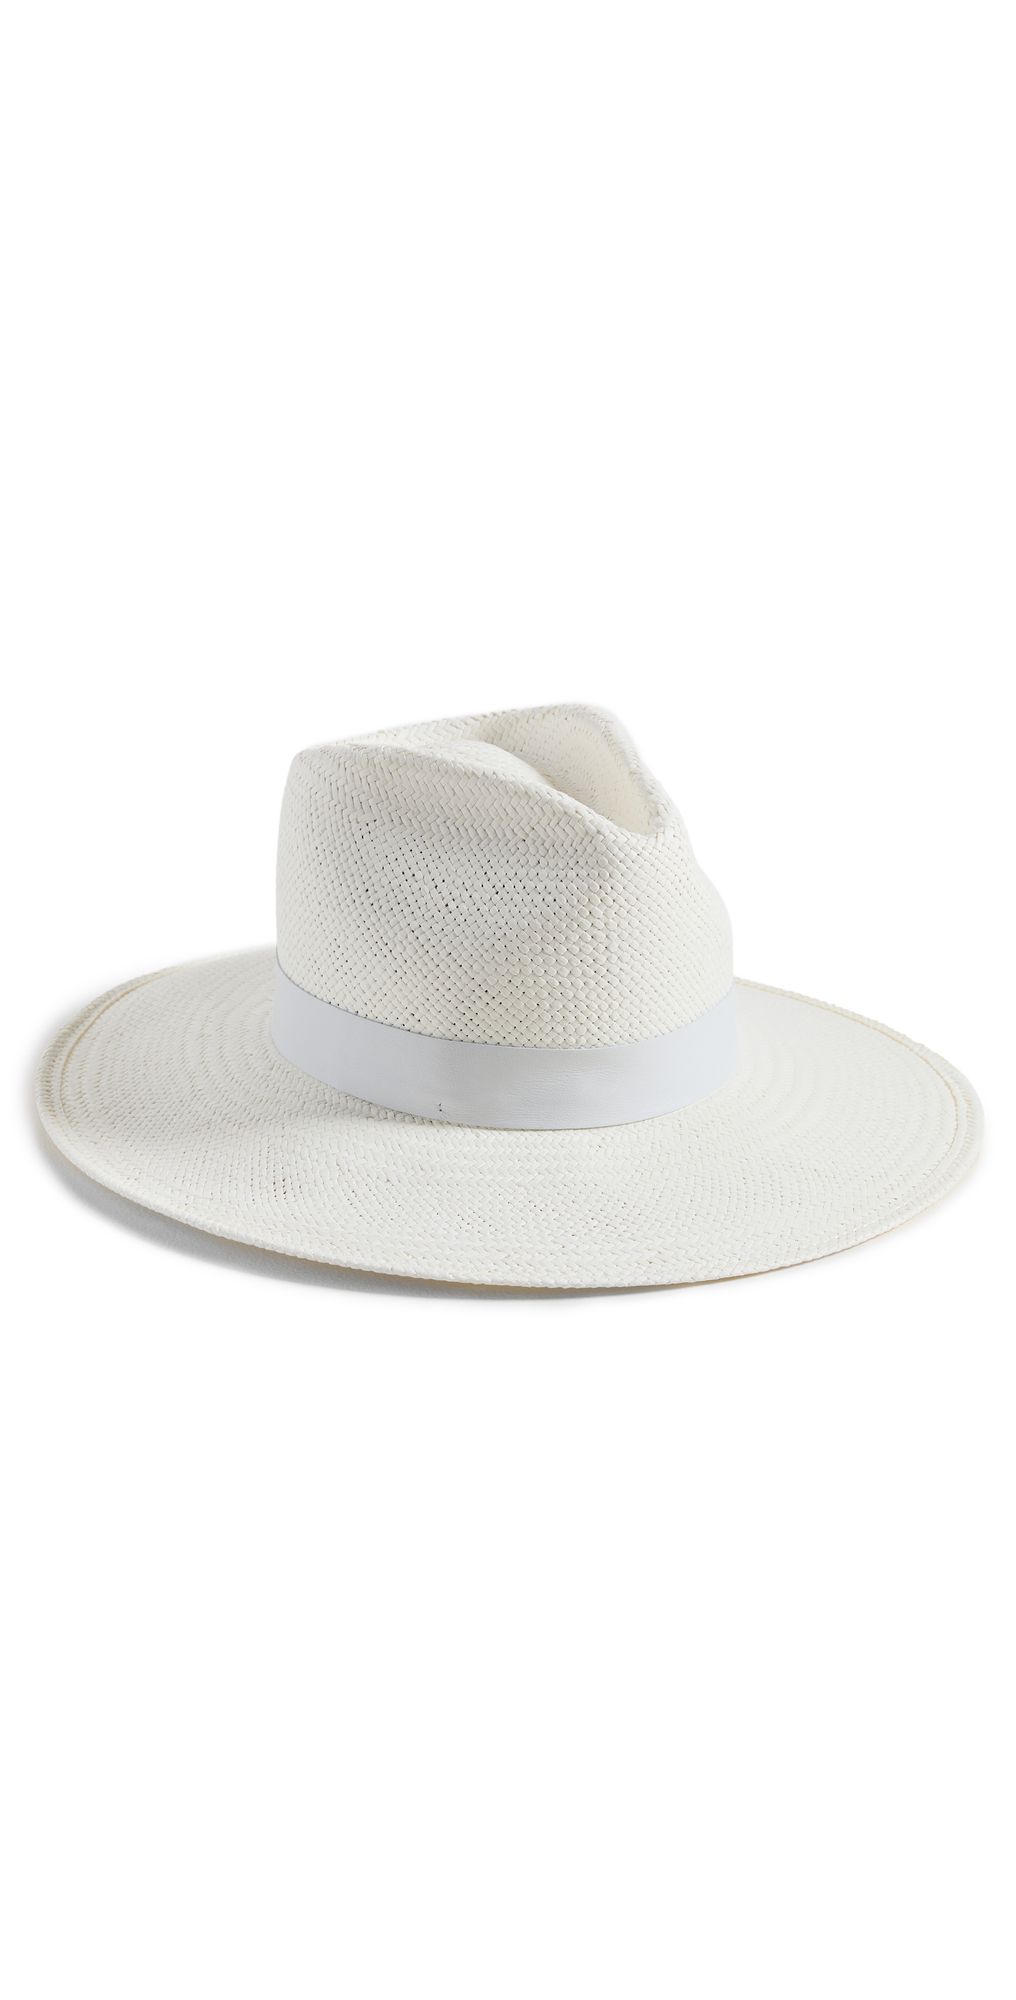 Janessa Leone Hamilton Straw Hat | Shopbop